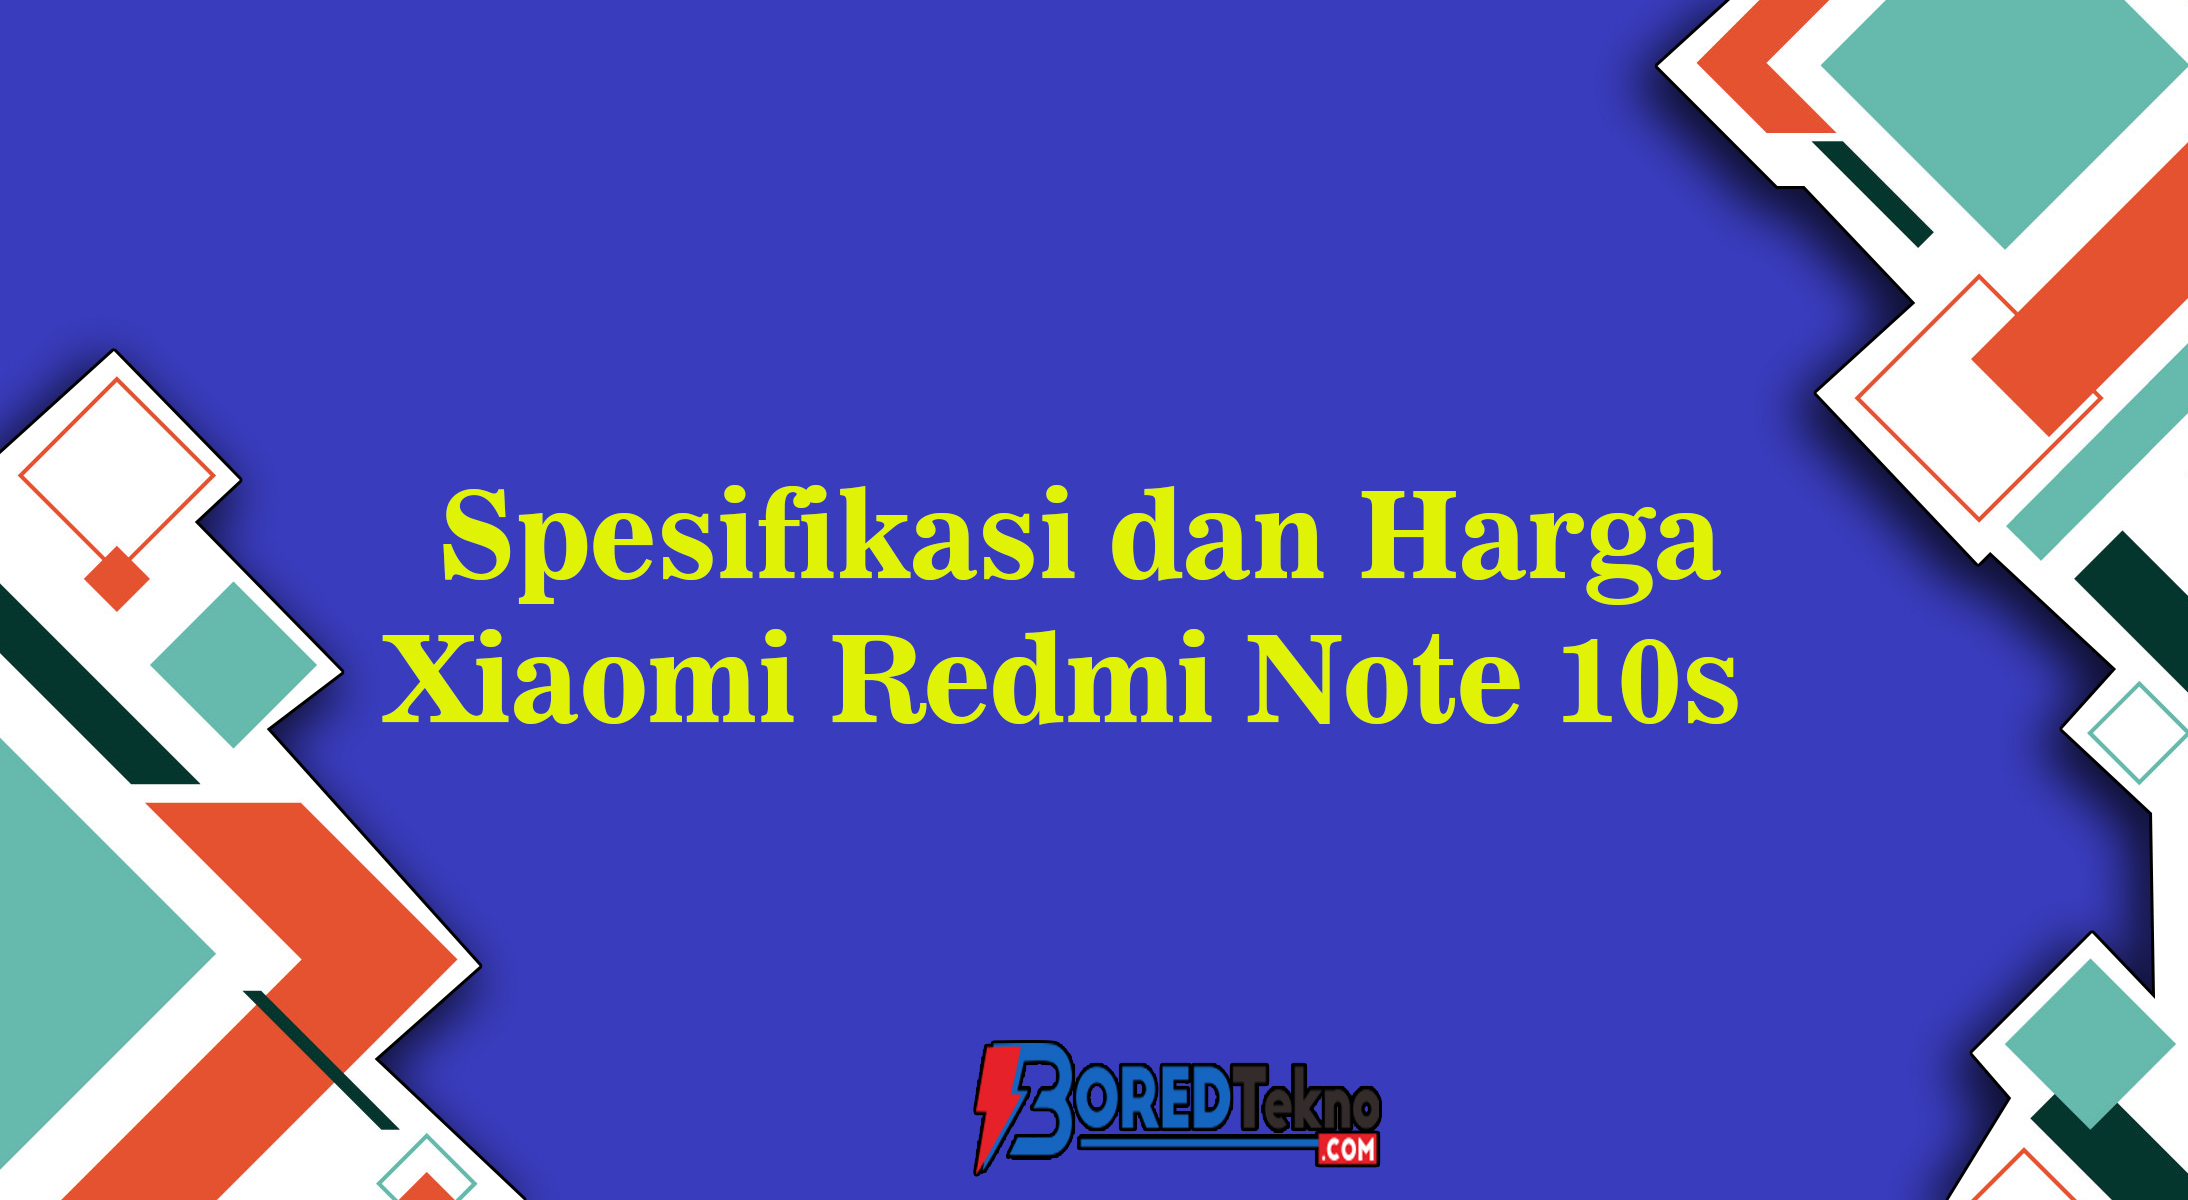 Spesifikasi dan Harga Xiaomi Redmi Note 10s